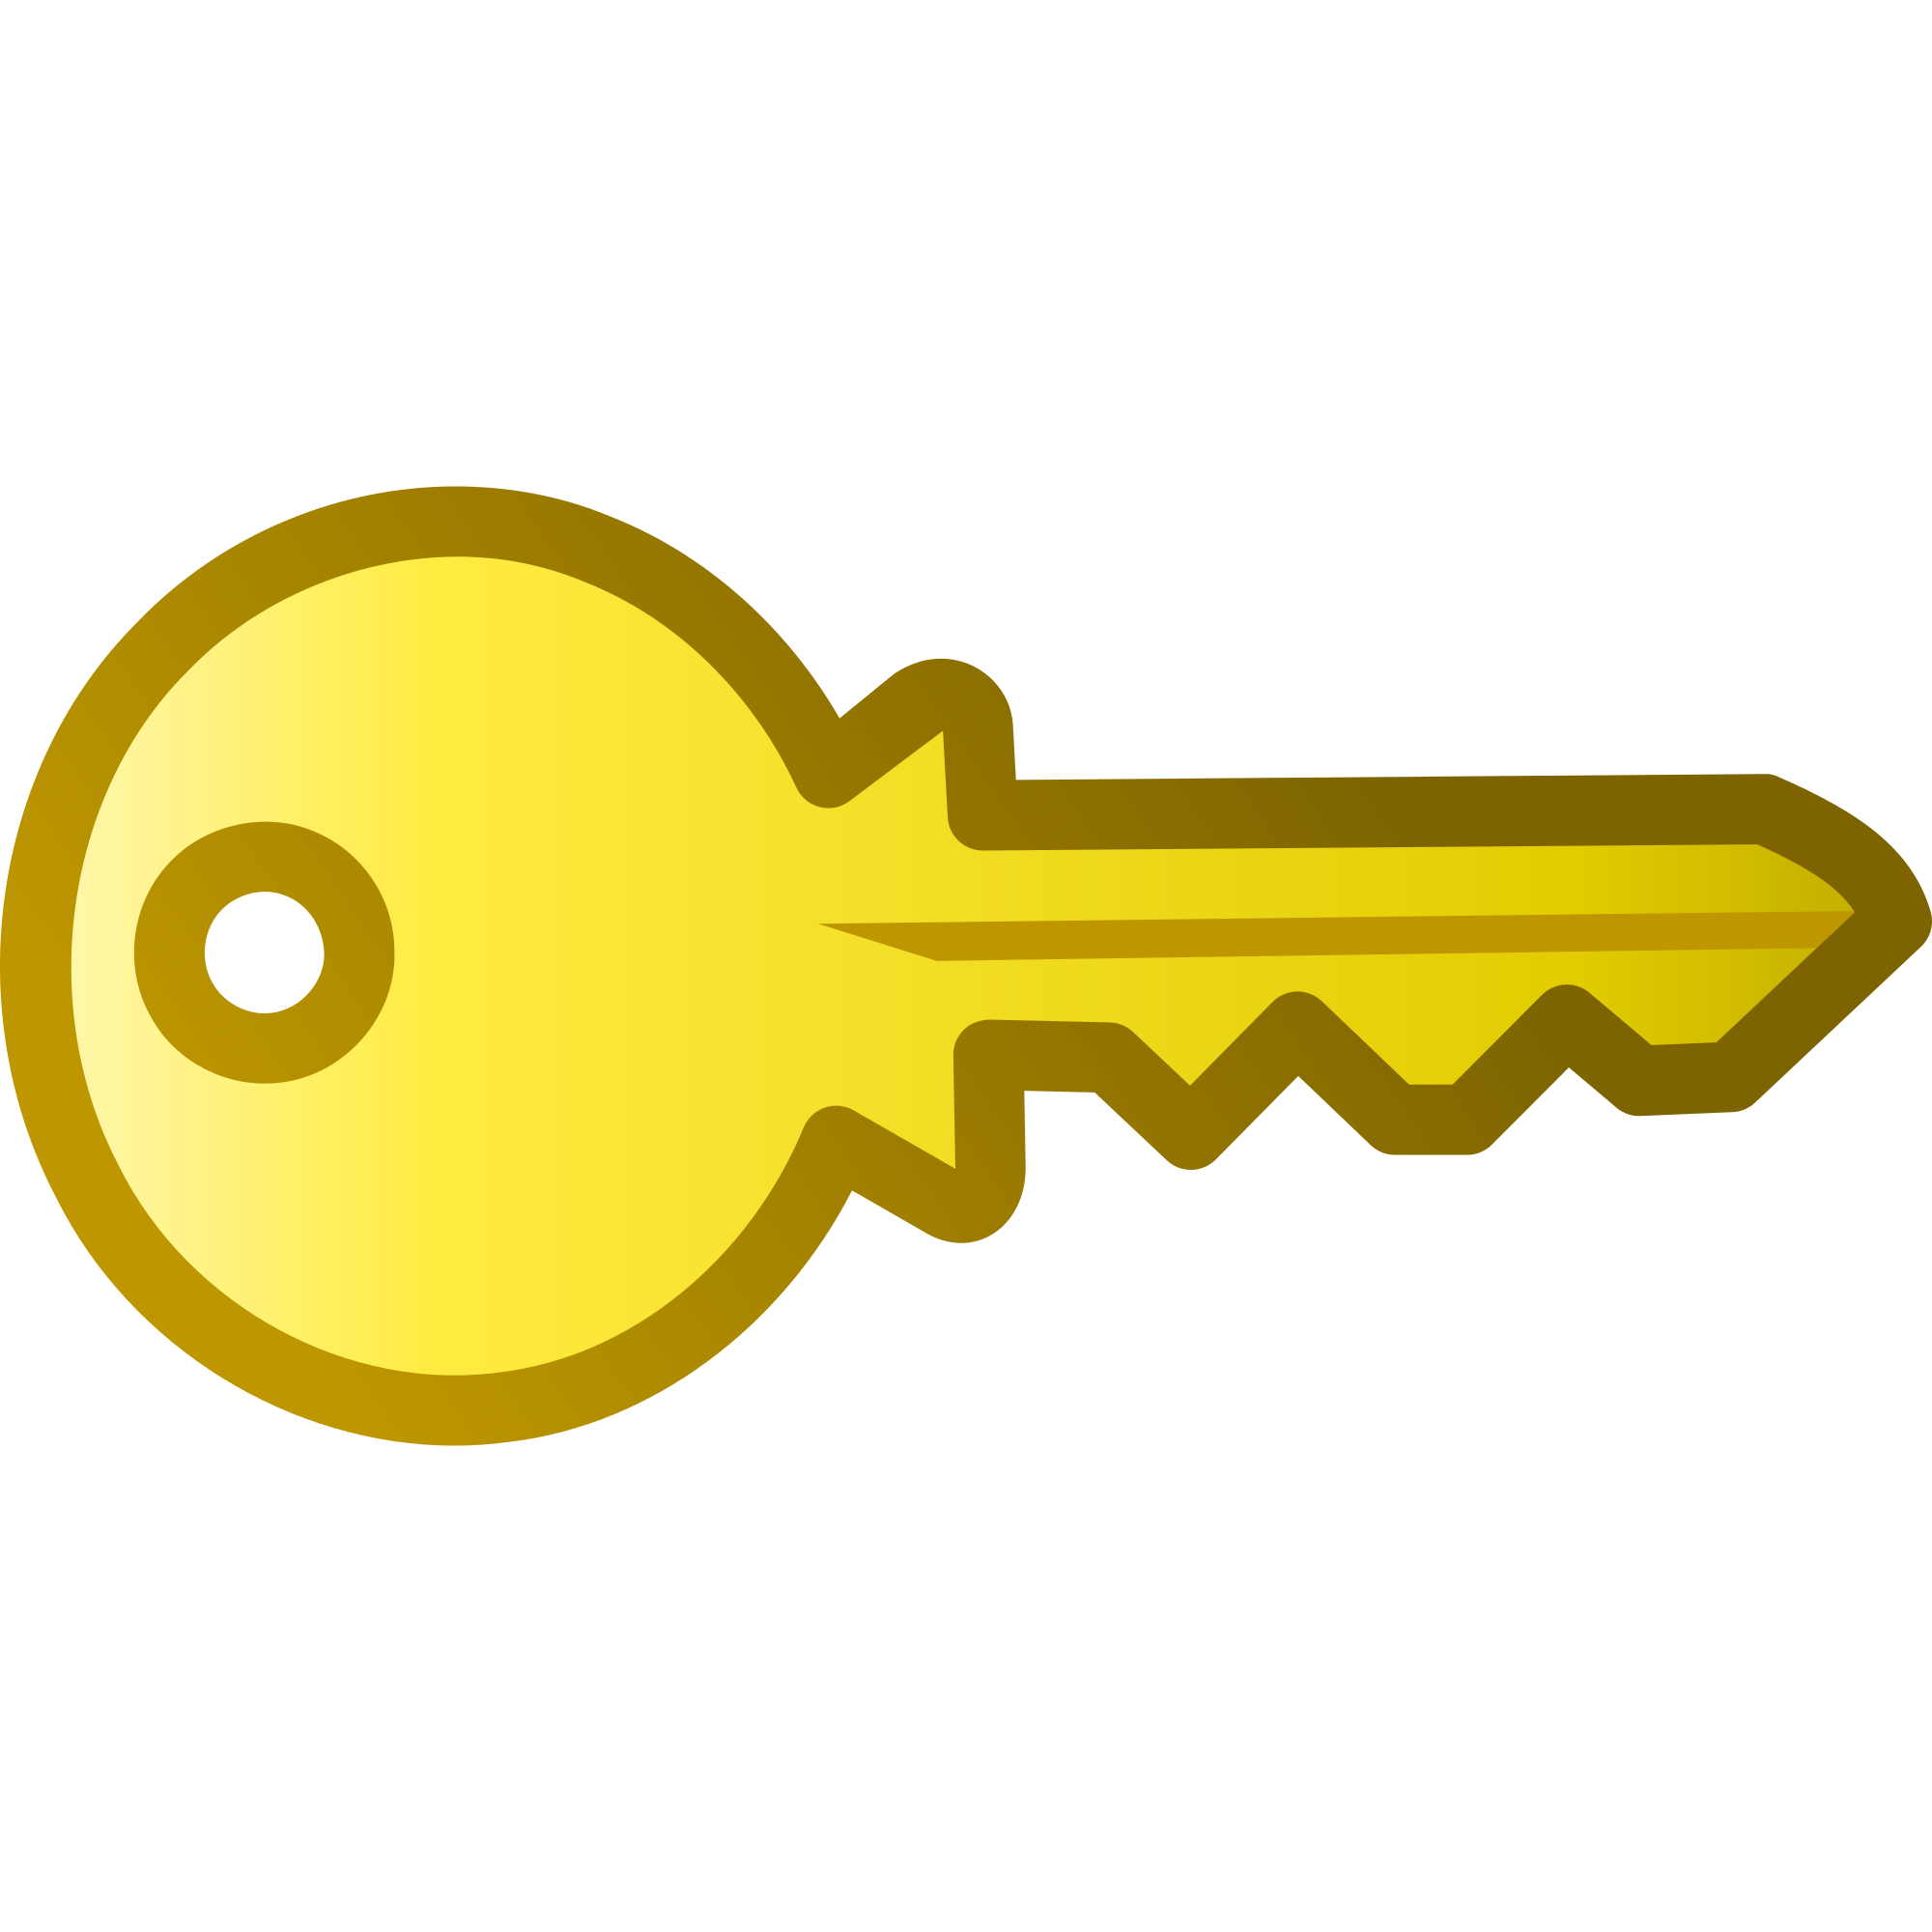 key clipart key concept